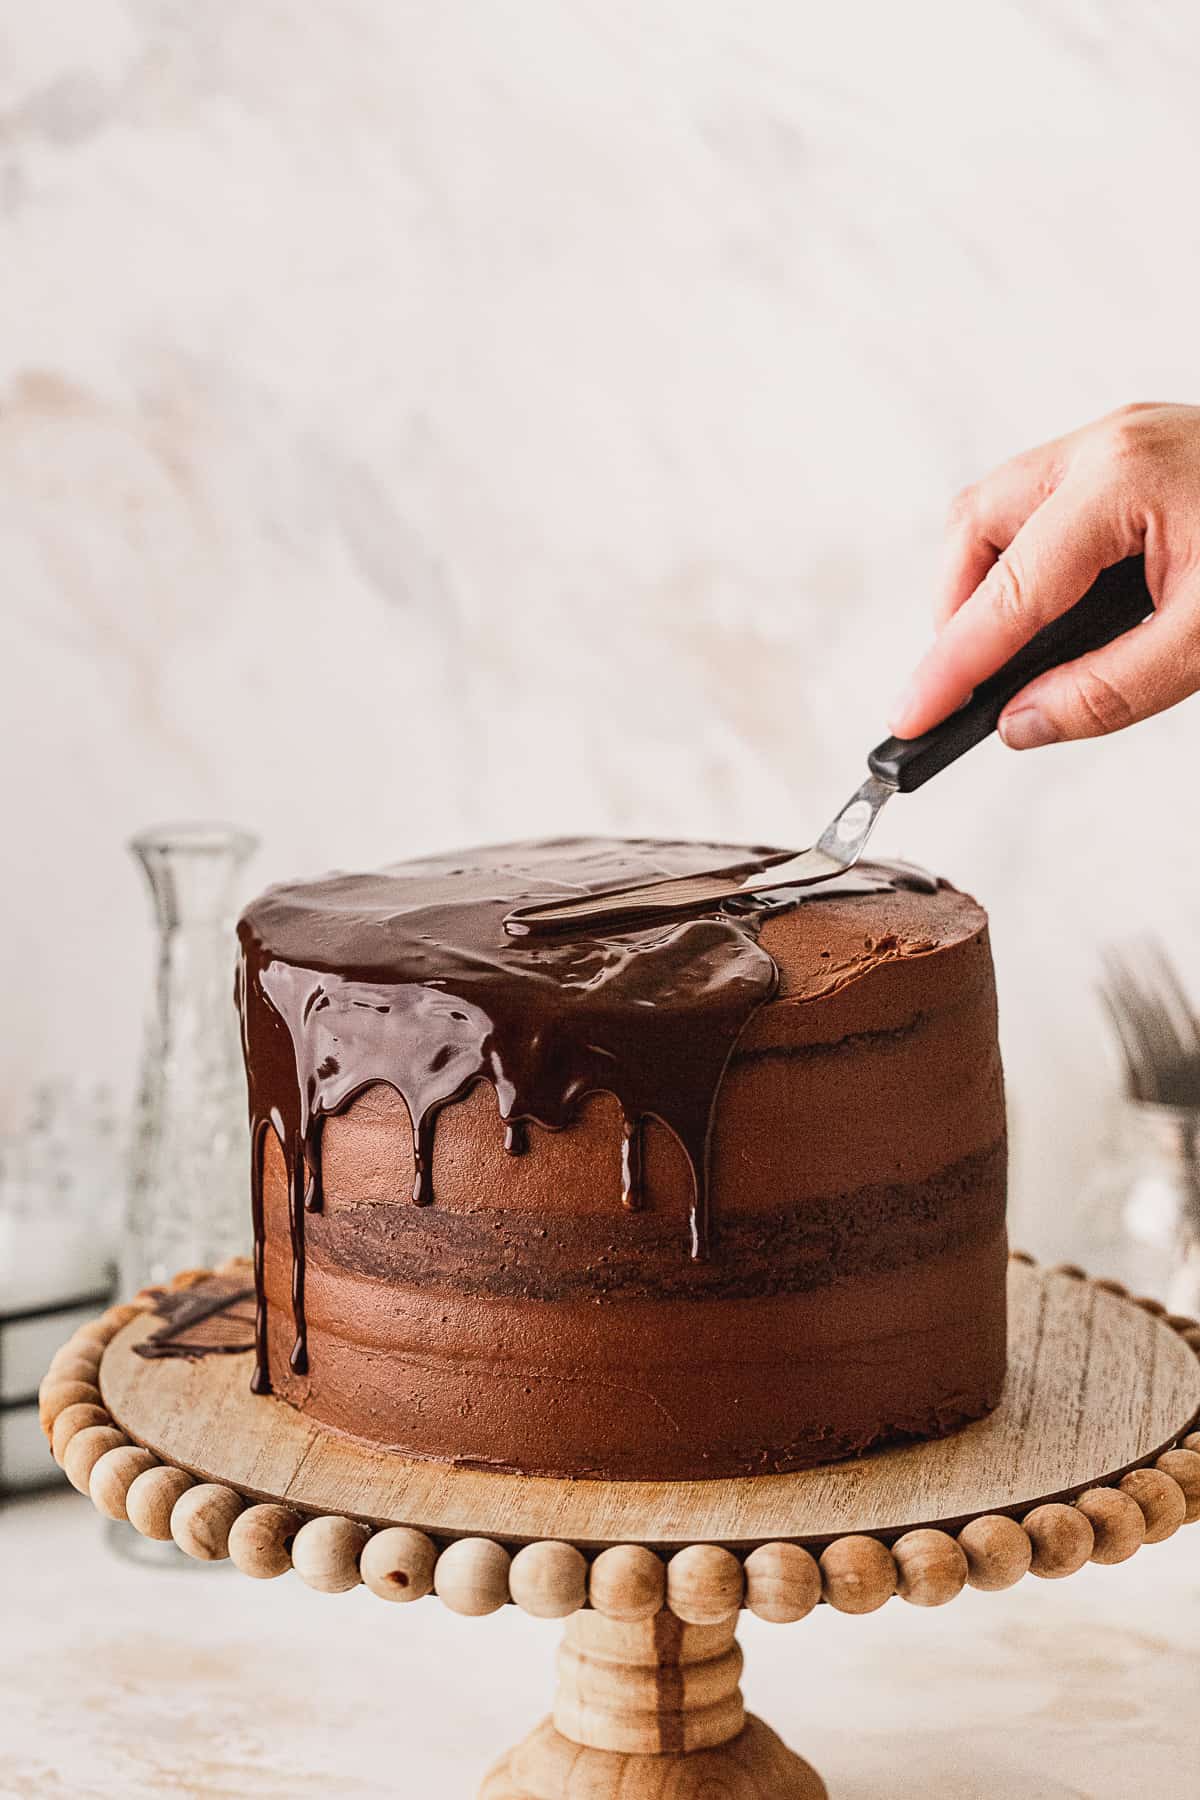 Spreading chocolate ganache on top of cake.